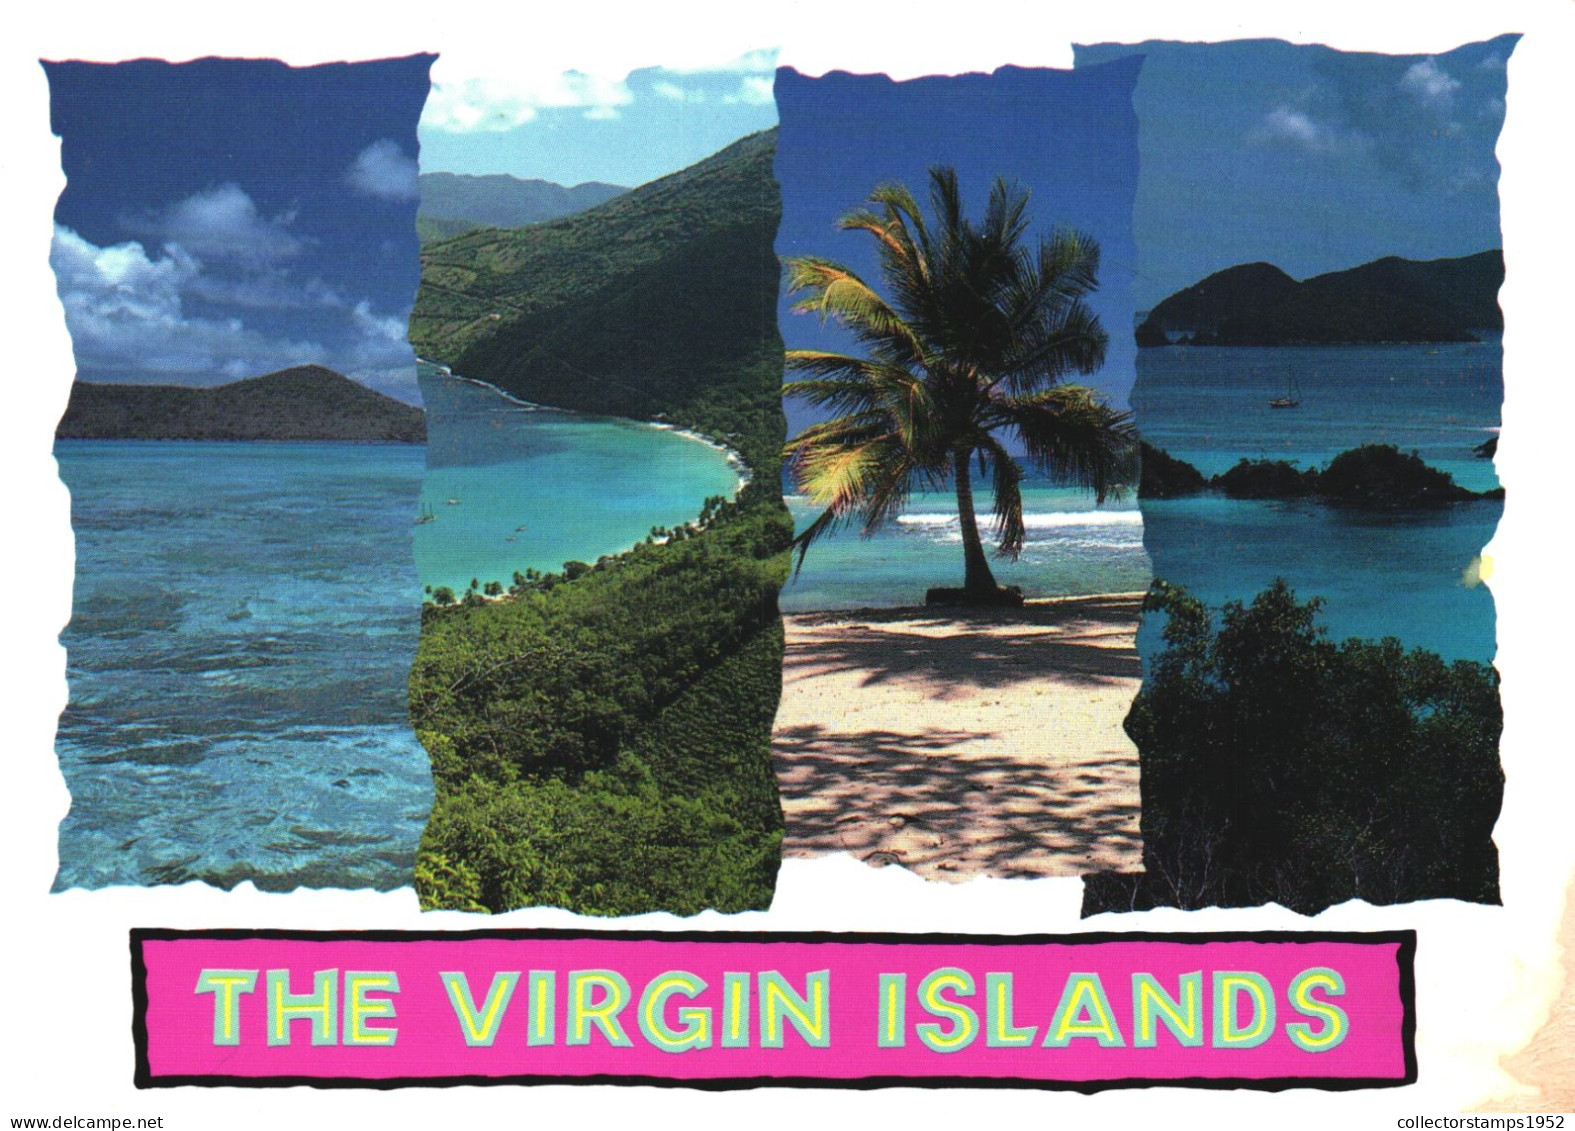 VIRGIN ISLANDS, MULTIPLE VIEWS, COAST, CARIBBEAN SEA, ANTILLES - Virgin Islands, British